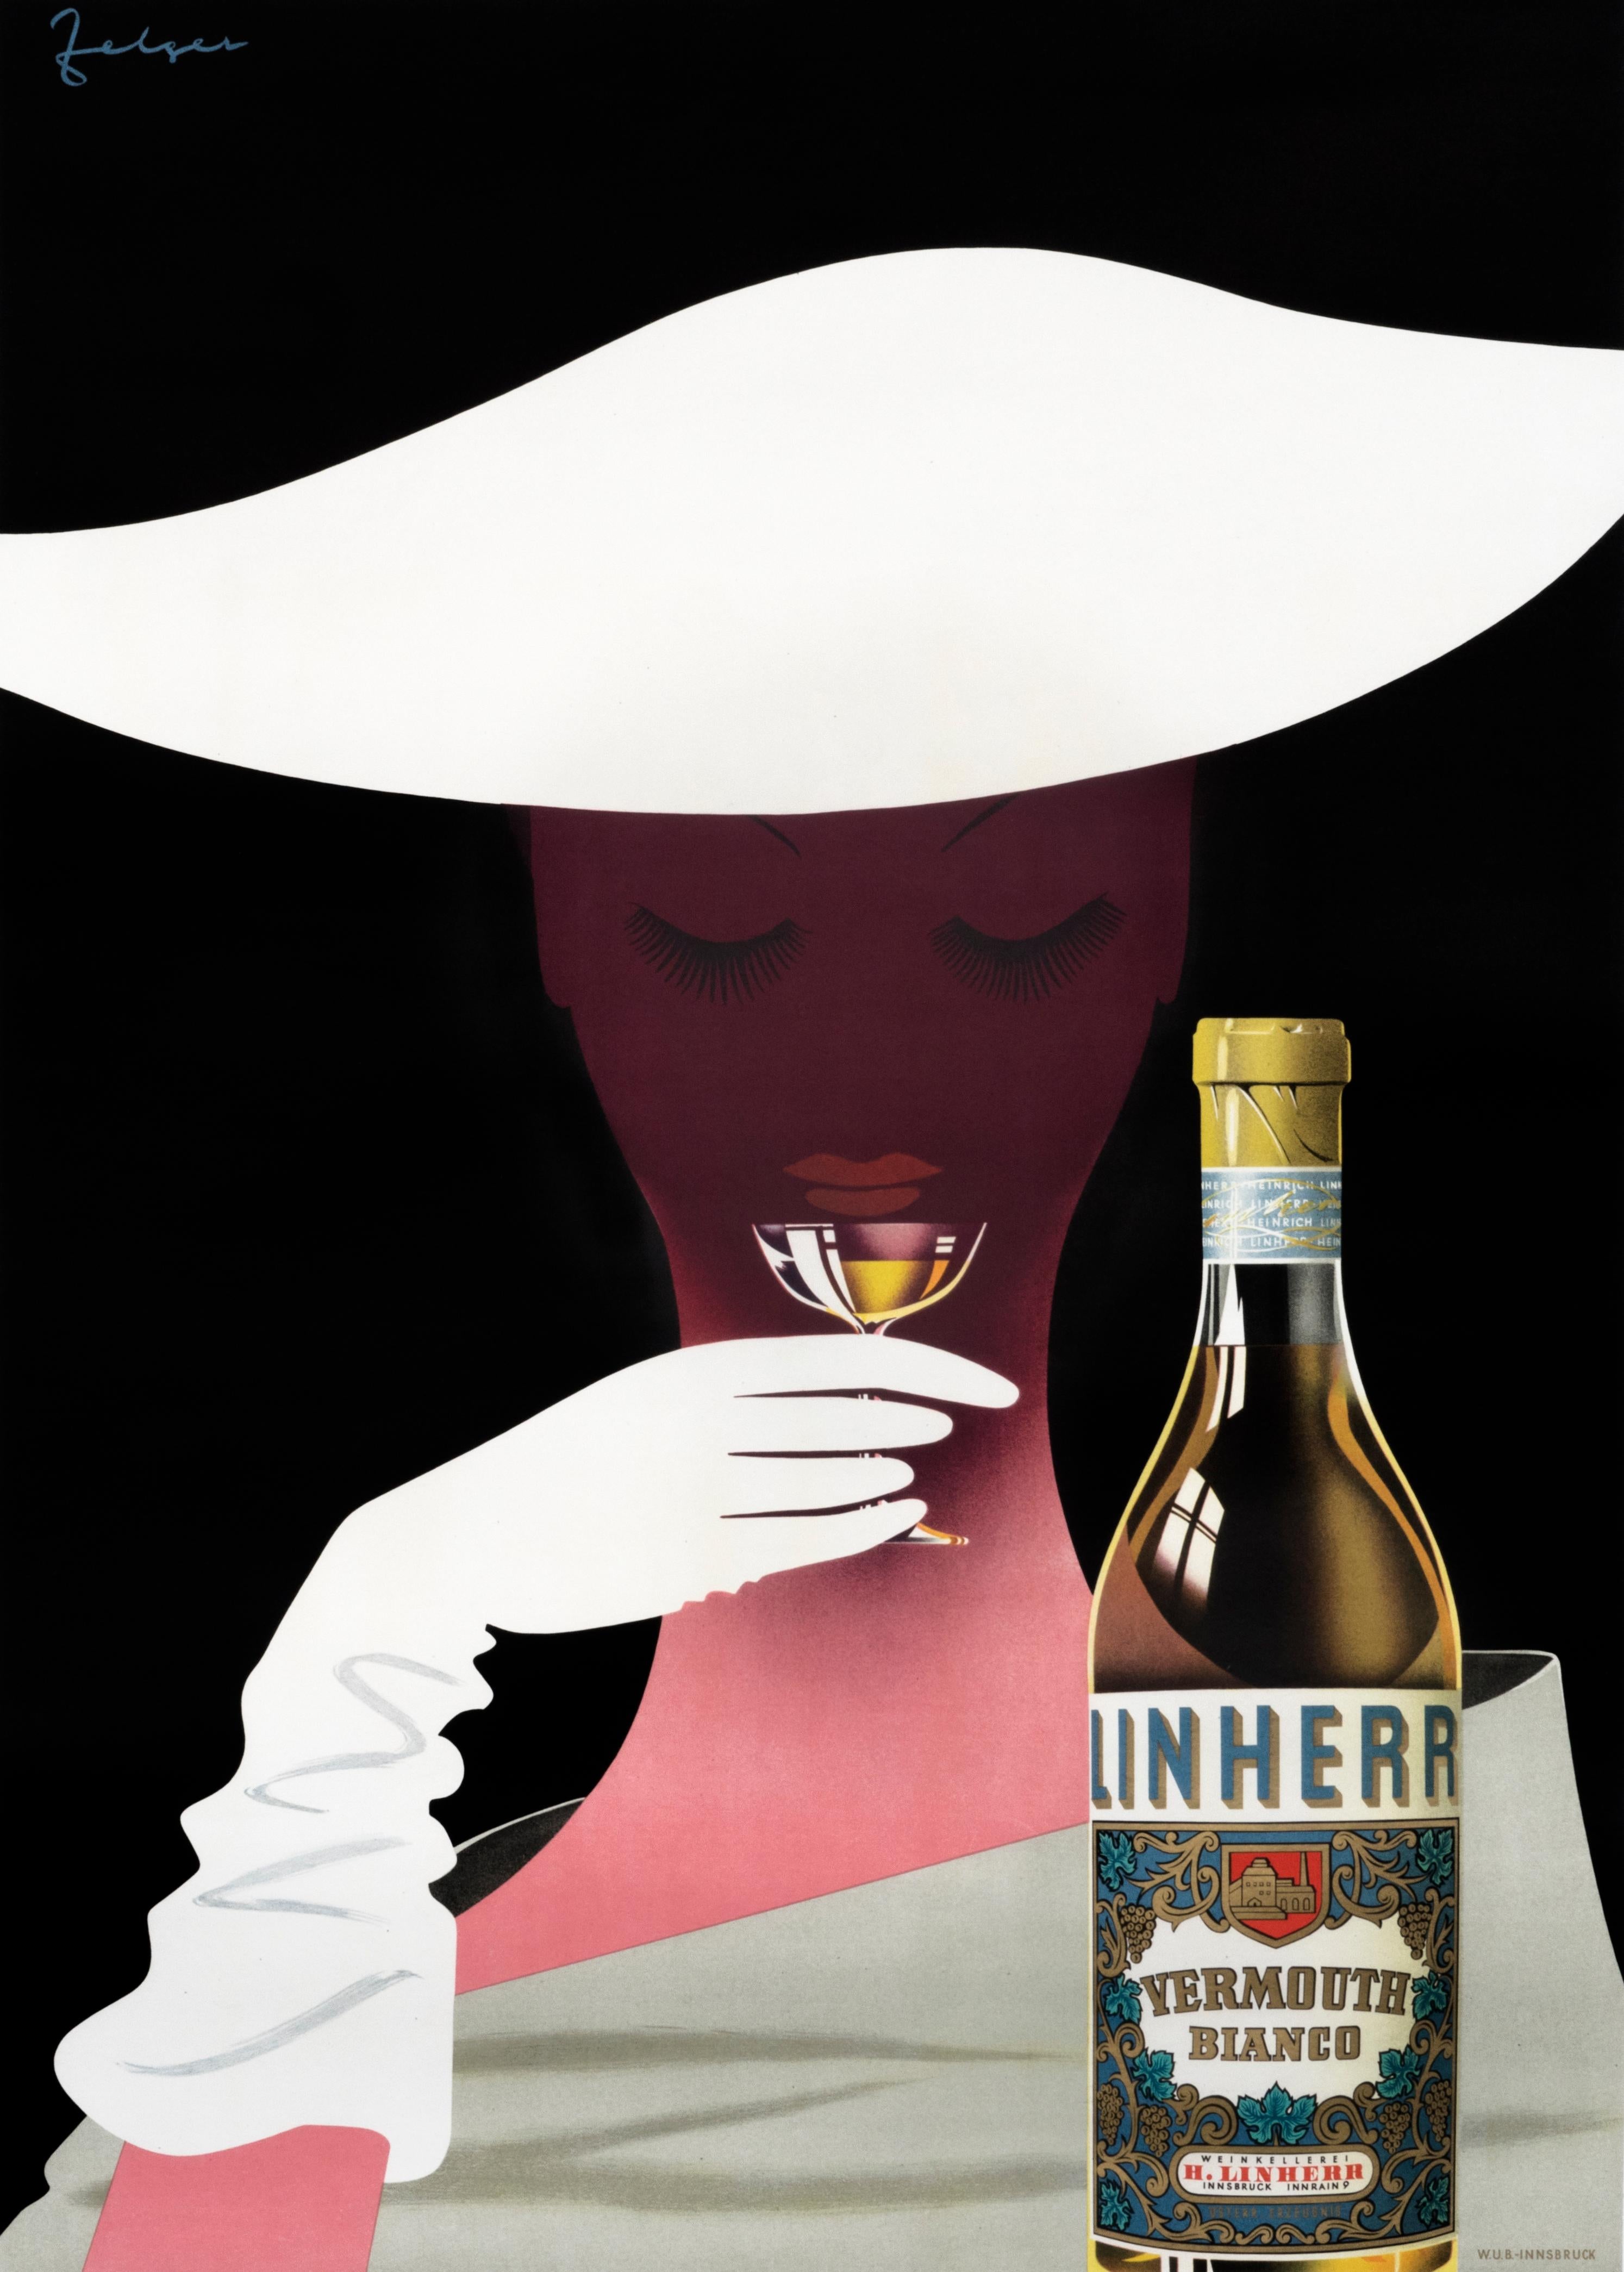 "Linherr Vermouth Bianco" Vintage Original Aperitif Poster  - Print by Arthur Zelger